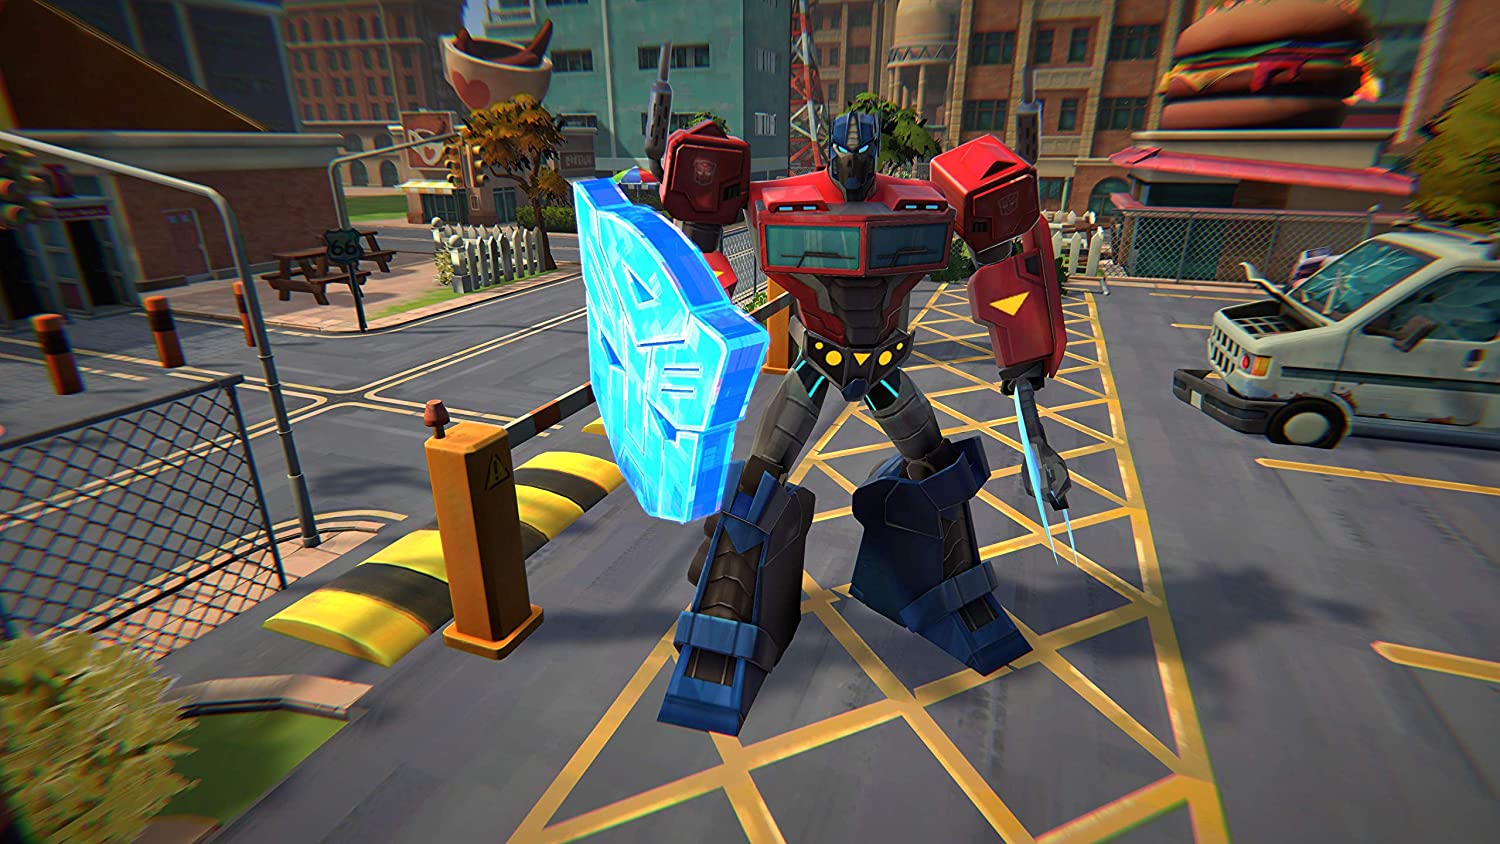 Transformers Battlegrounds (Xbox One)